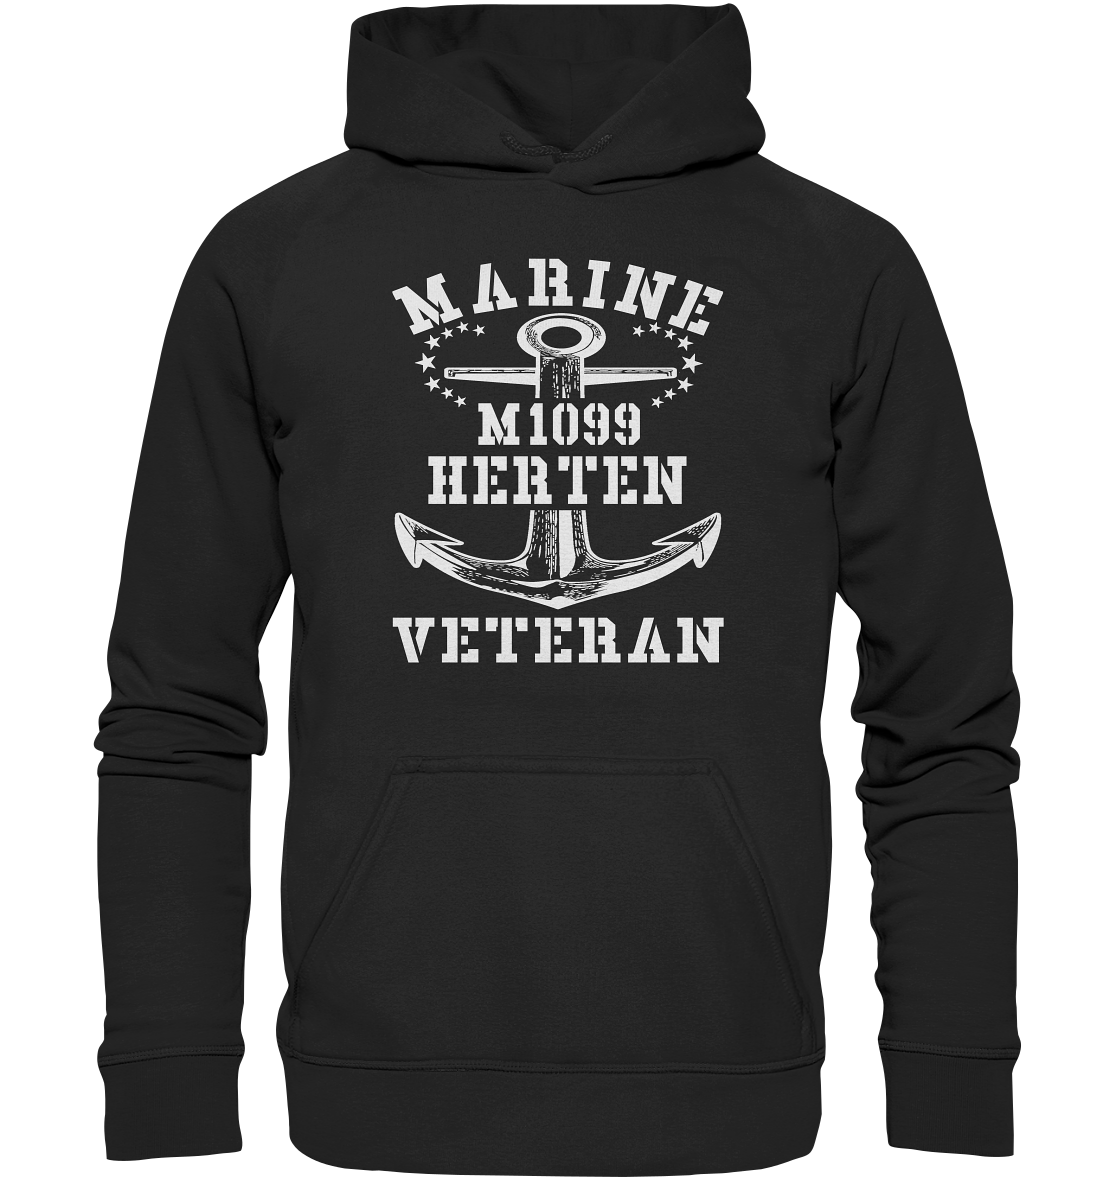 M1099 HERTEN Marine Veteran - Basic Unisex Hoodie XL